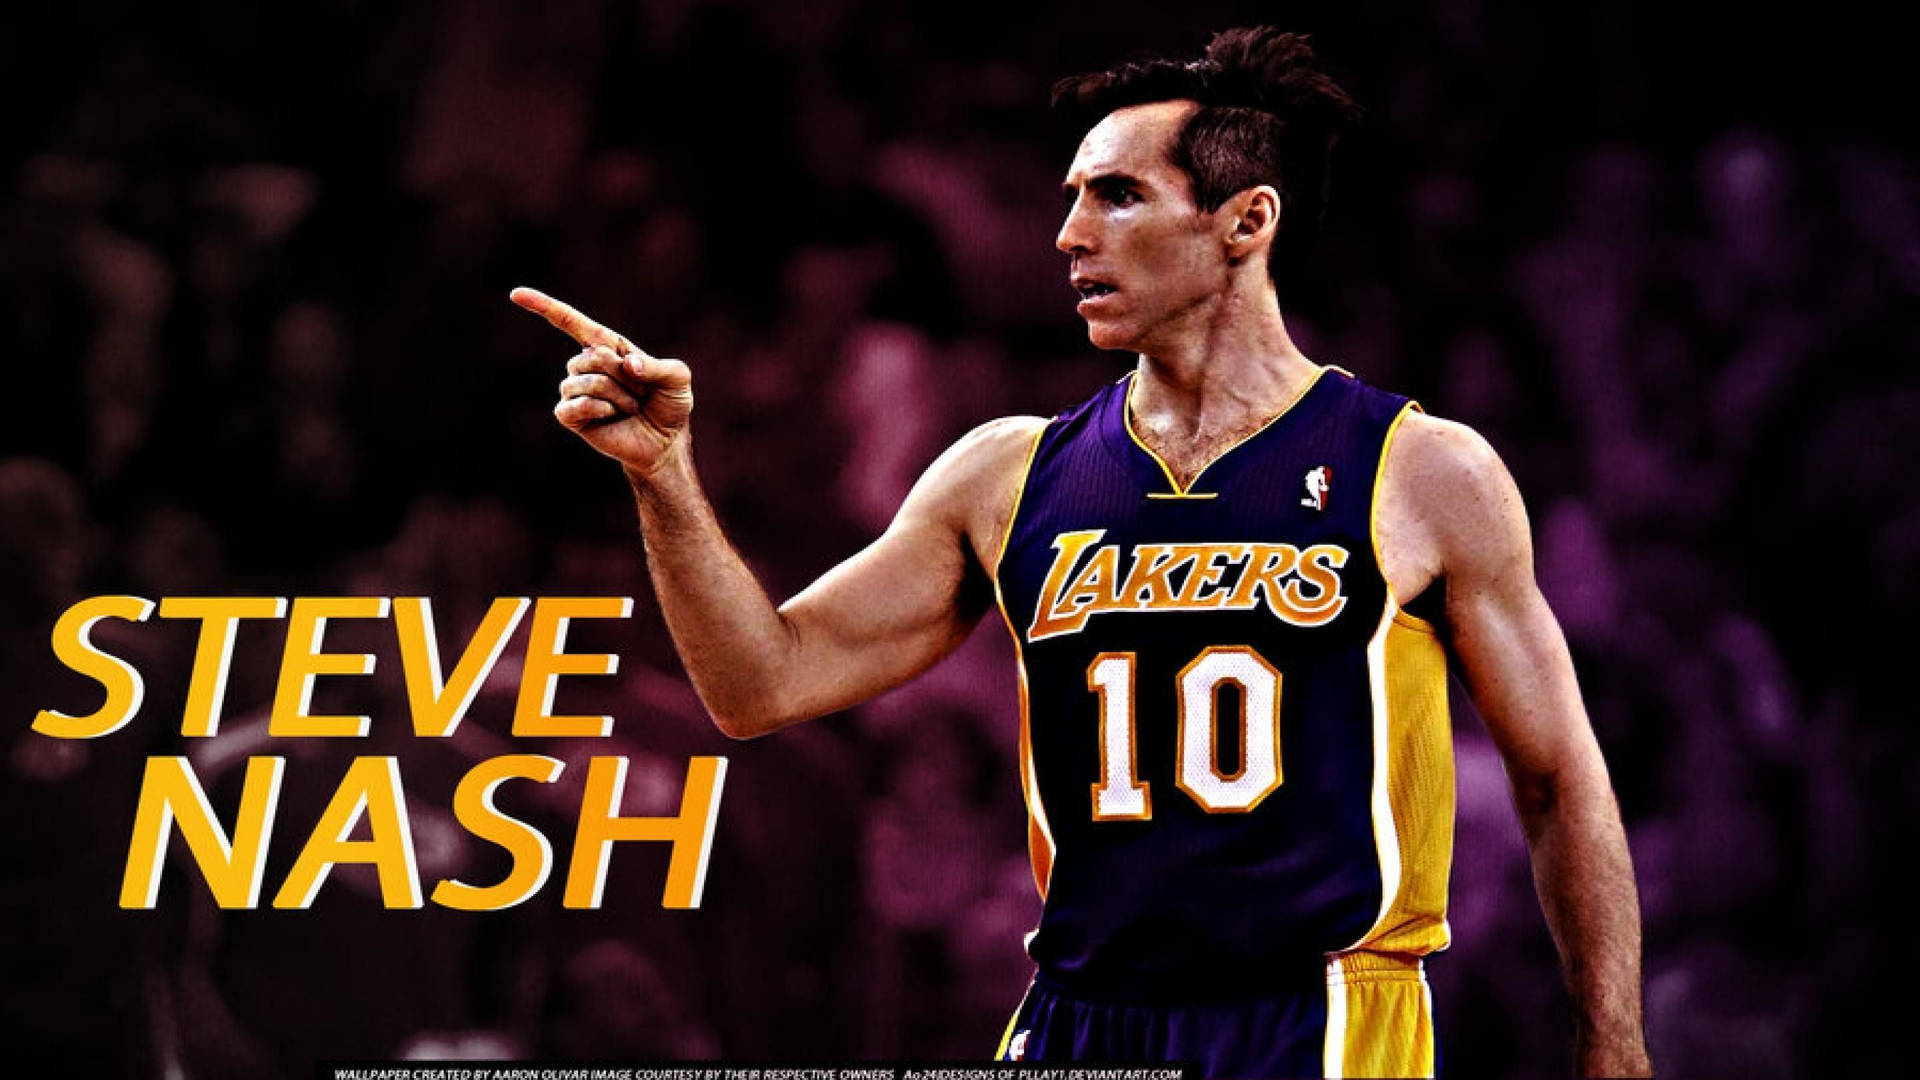 Stevenash Lakers Apontando. Papel de Parede